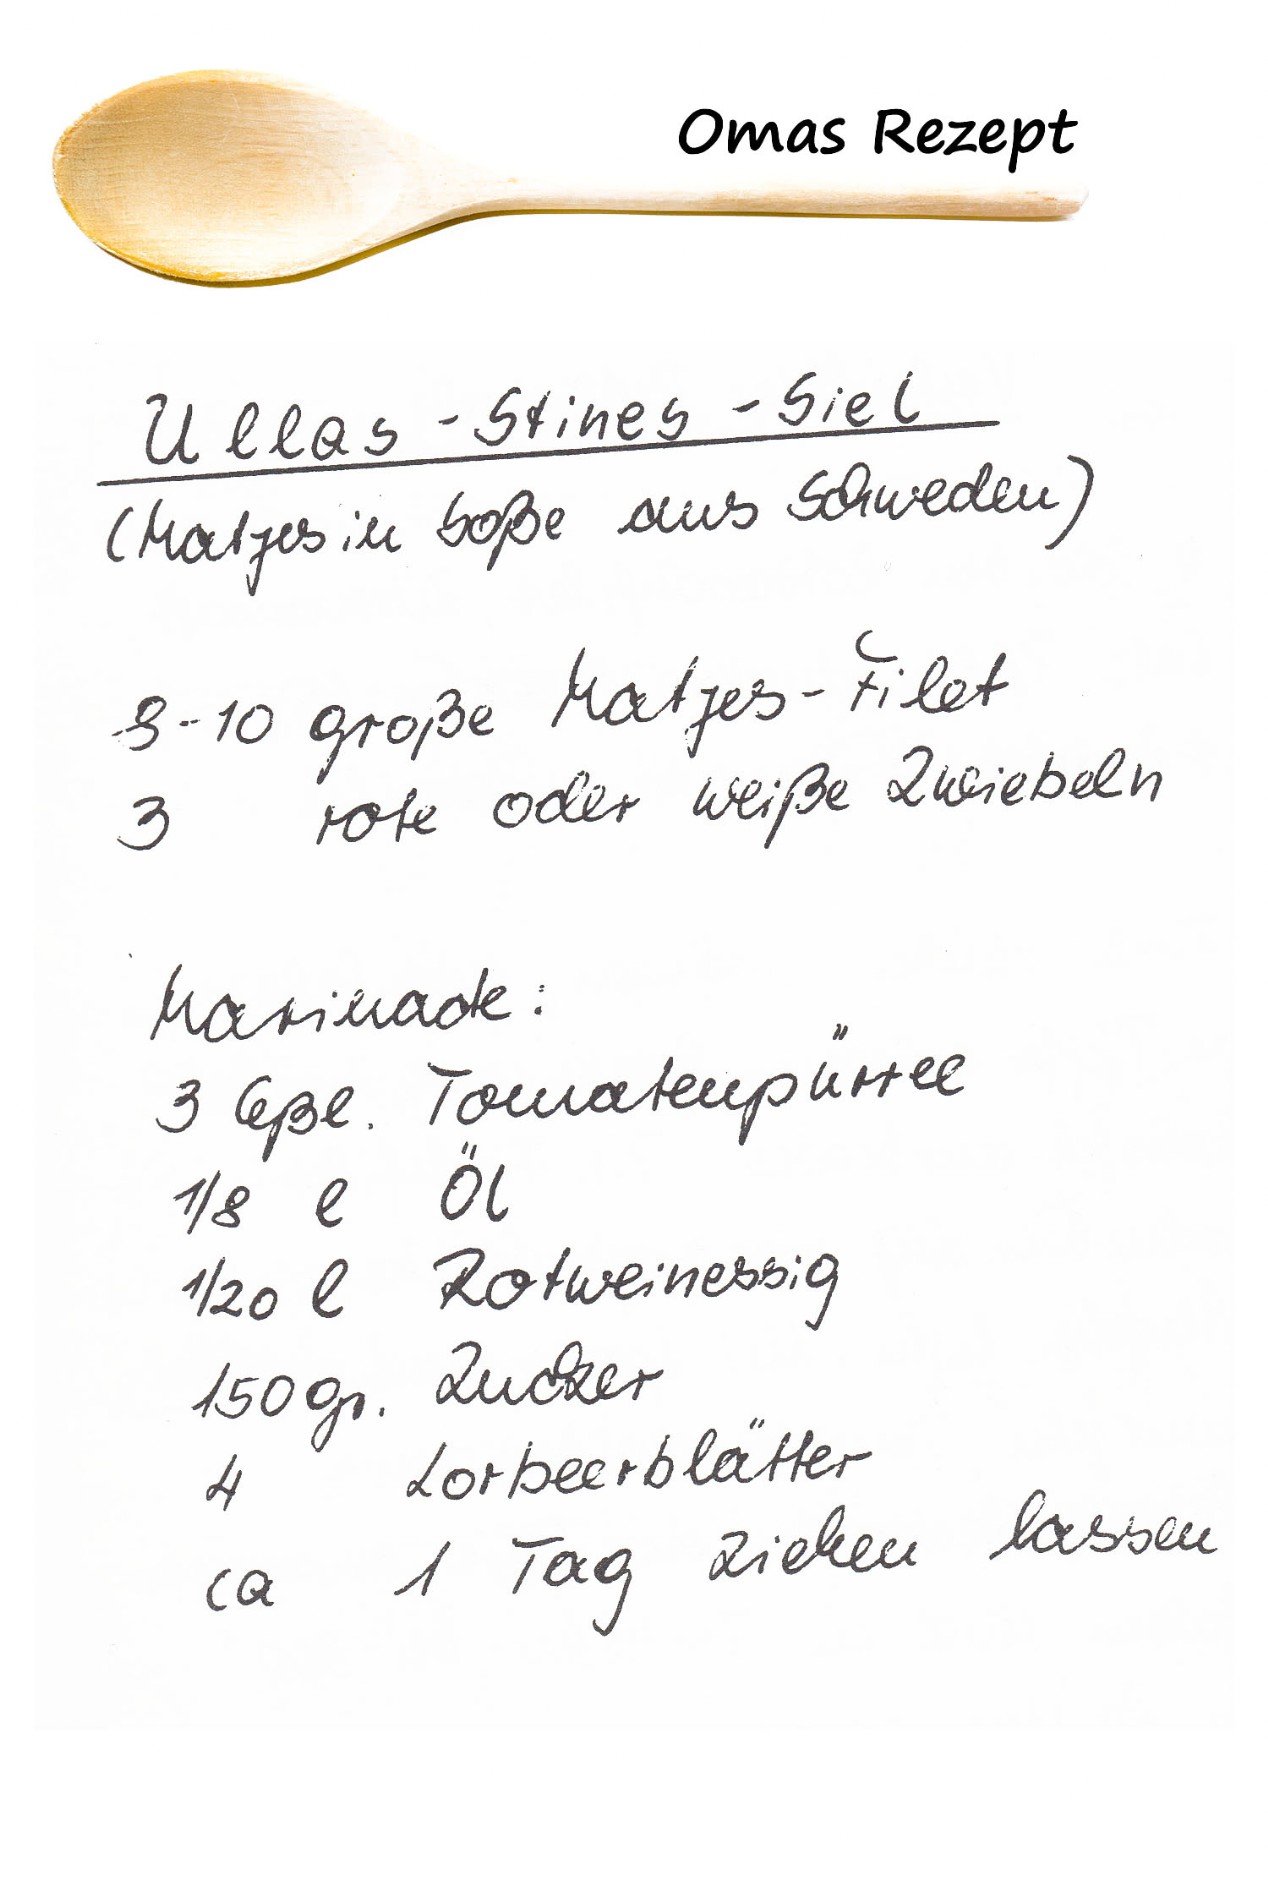 Ullas-Stines-Siel aus Omas Kochbuch 